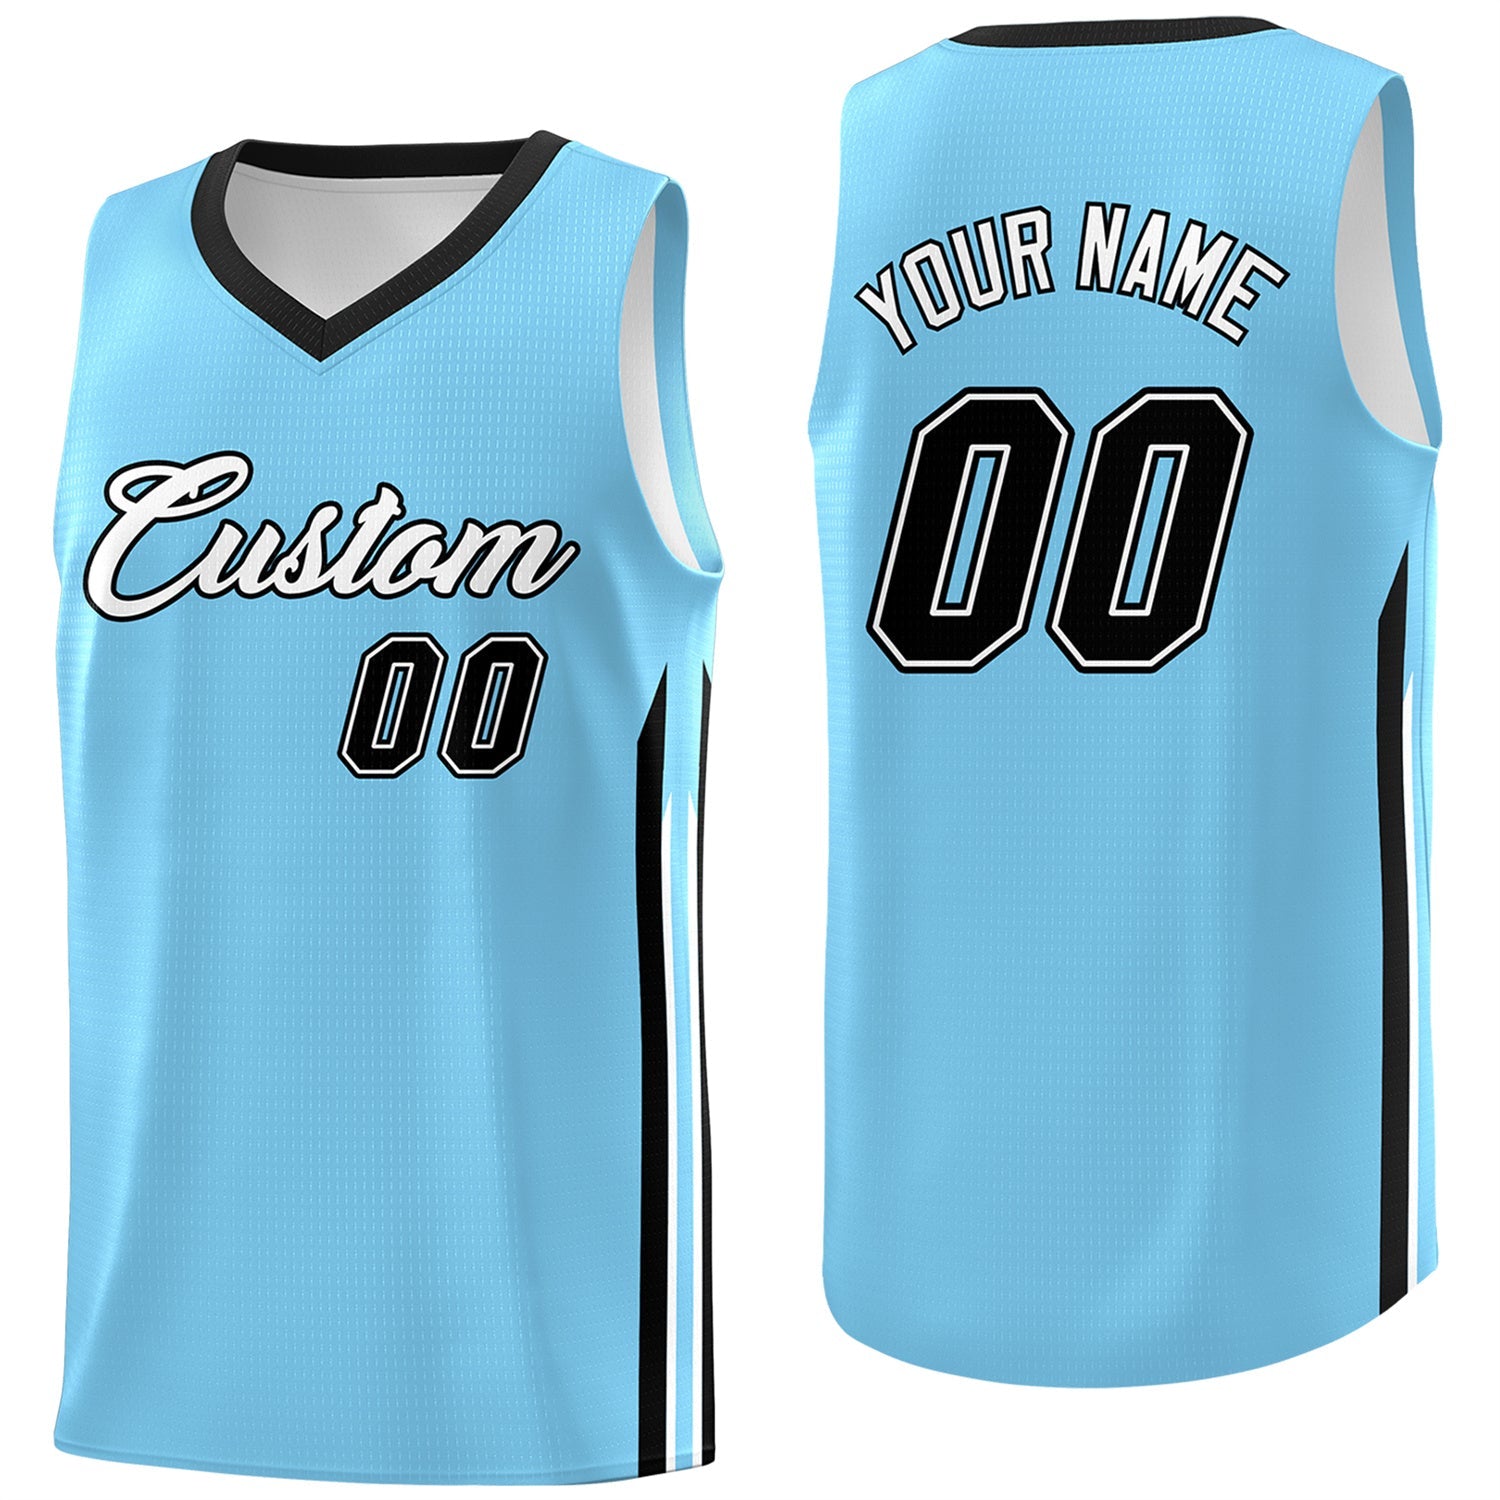 Customization Fashion Sublimation Polyester Dog NBA Basketball